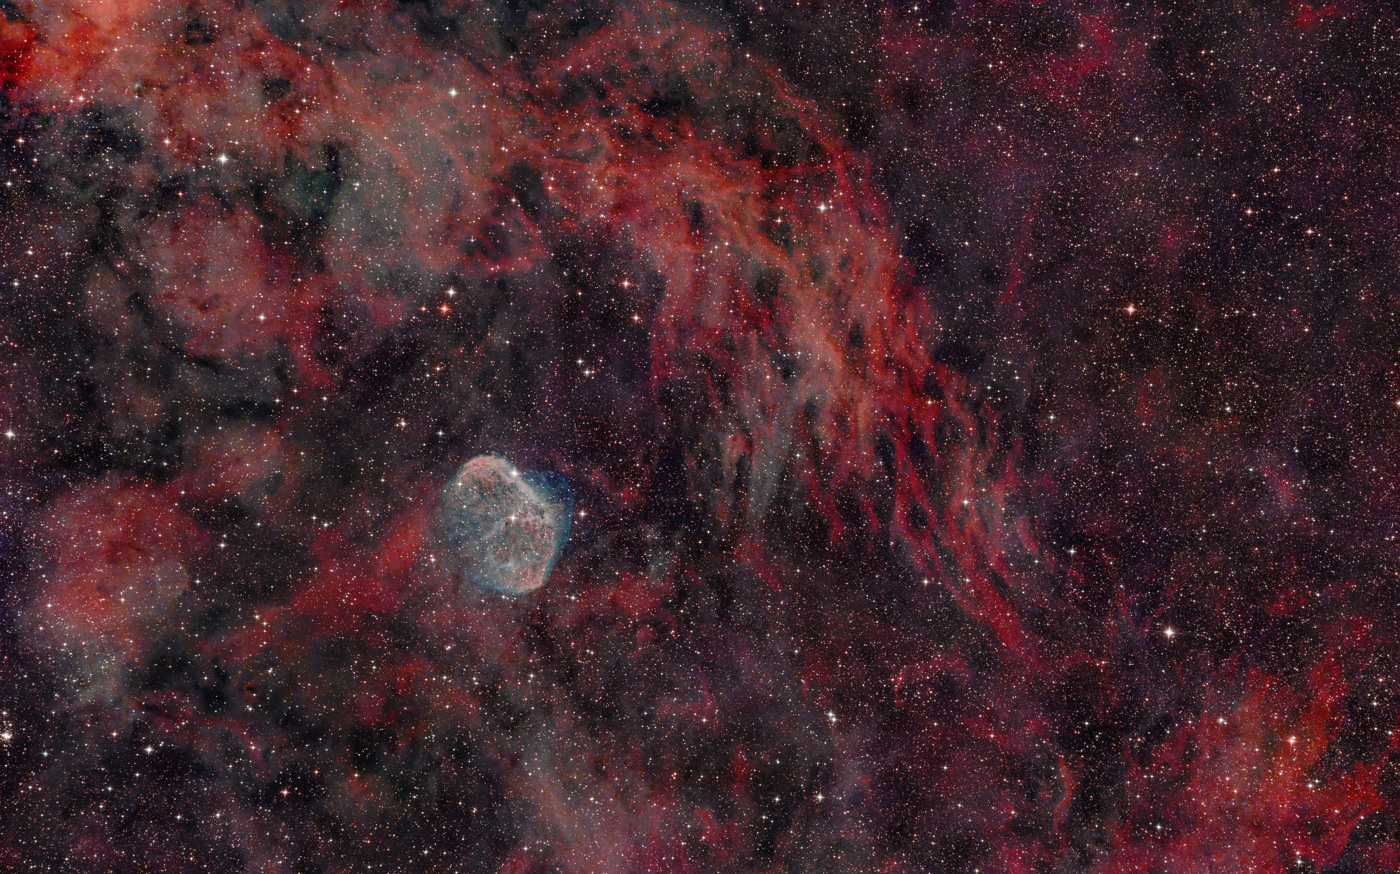  a red and blue nebula